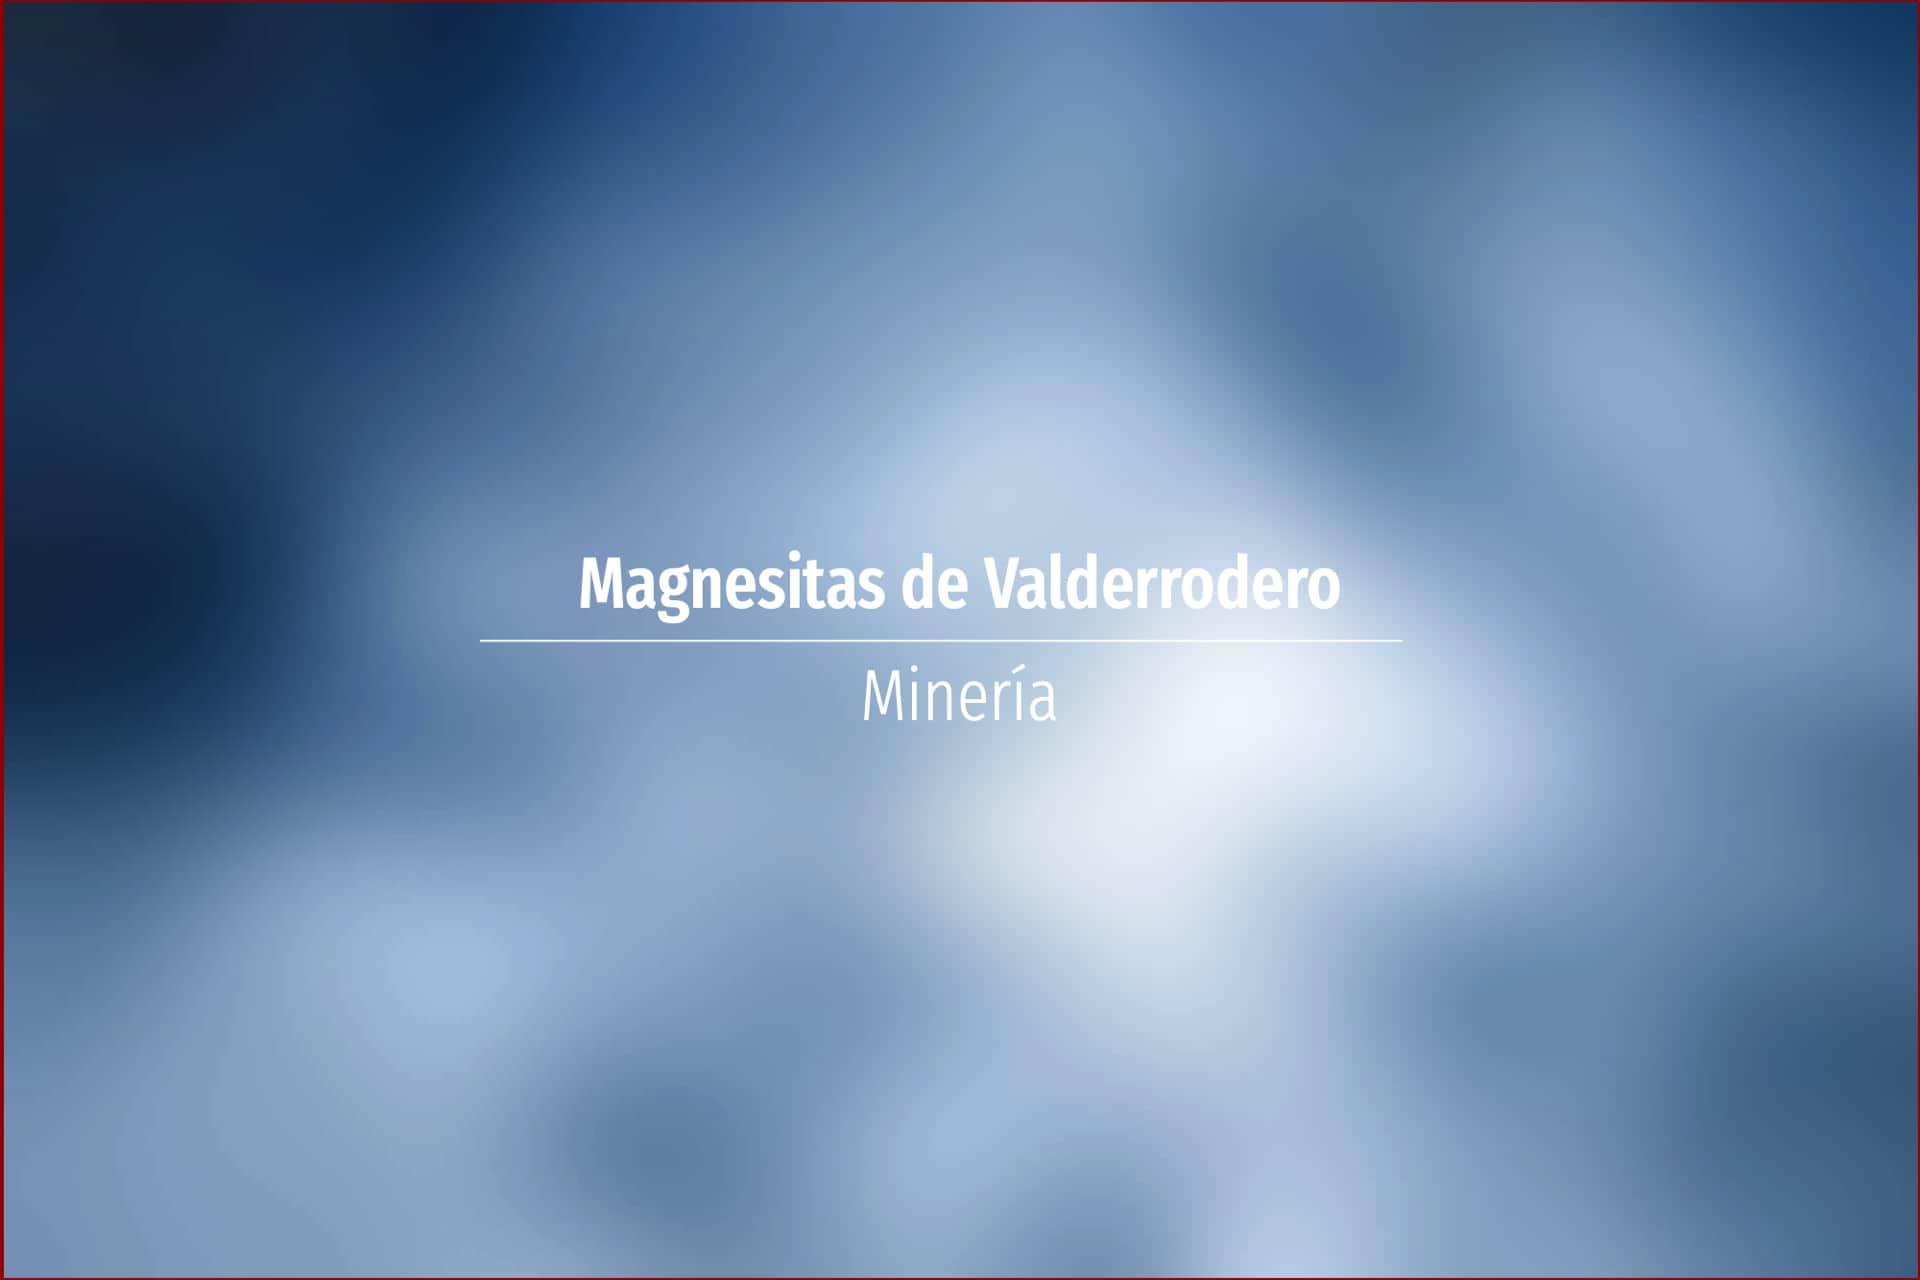 Magnesitas de Valderrodero